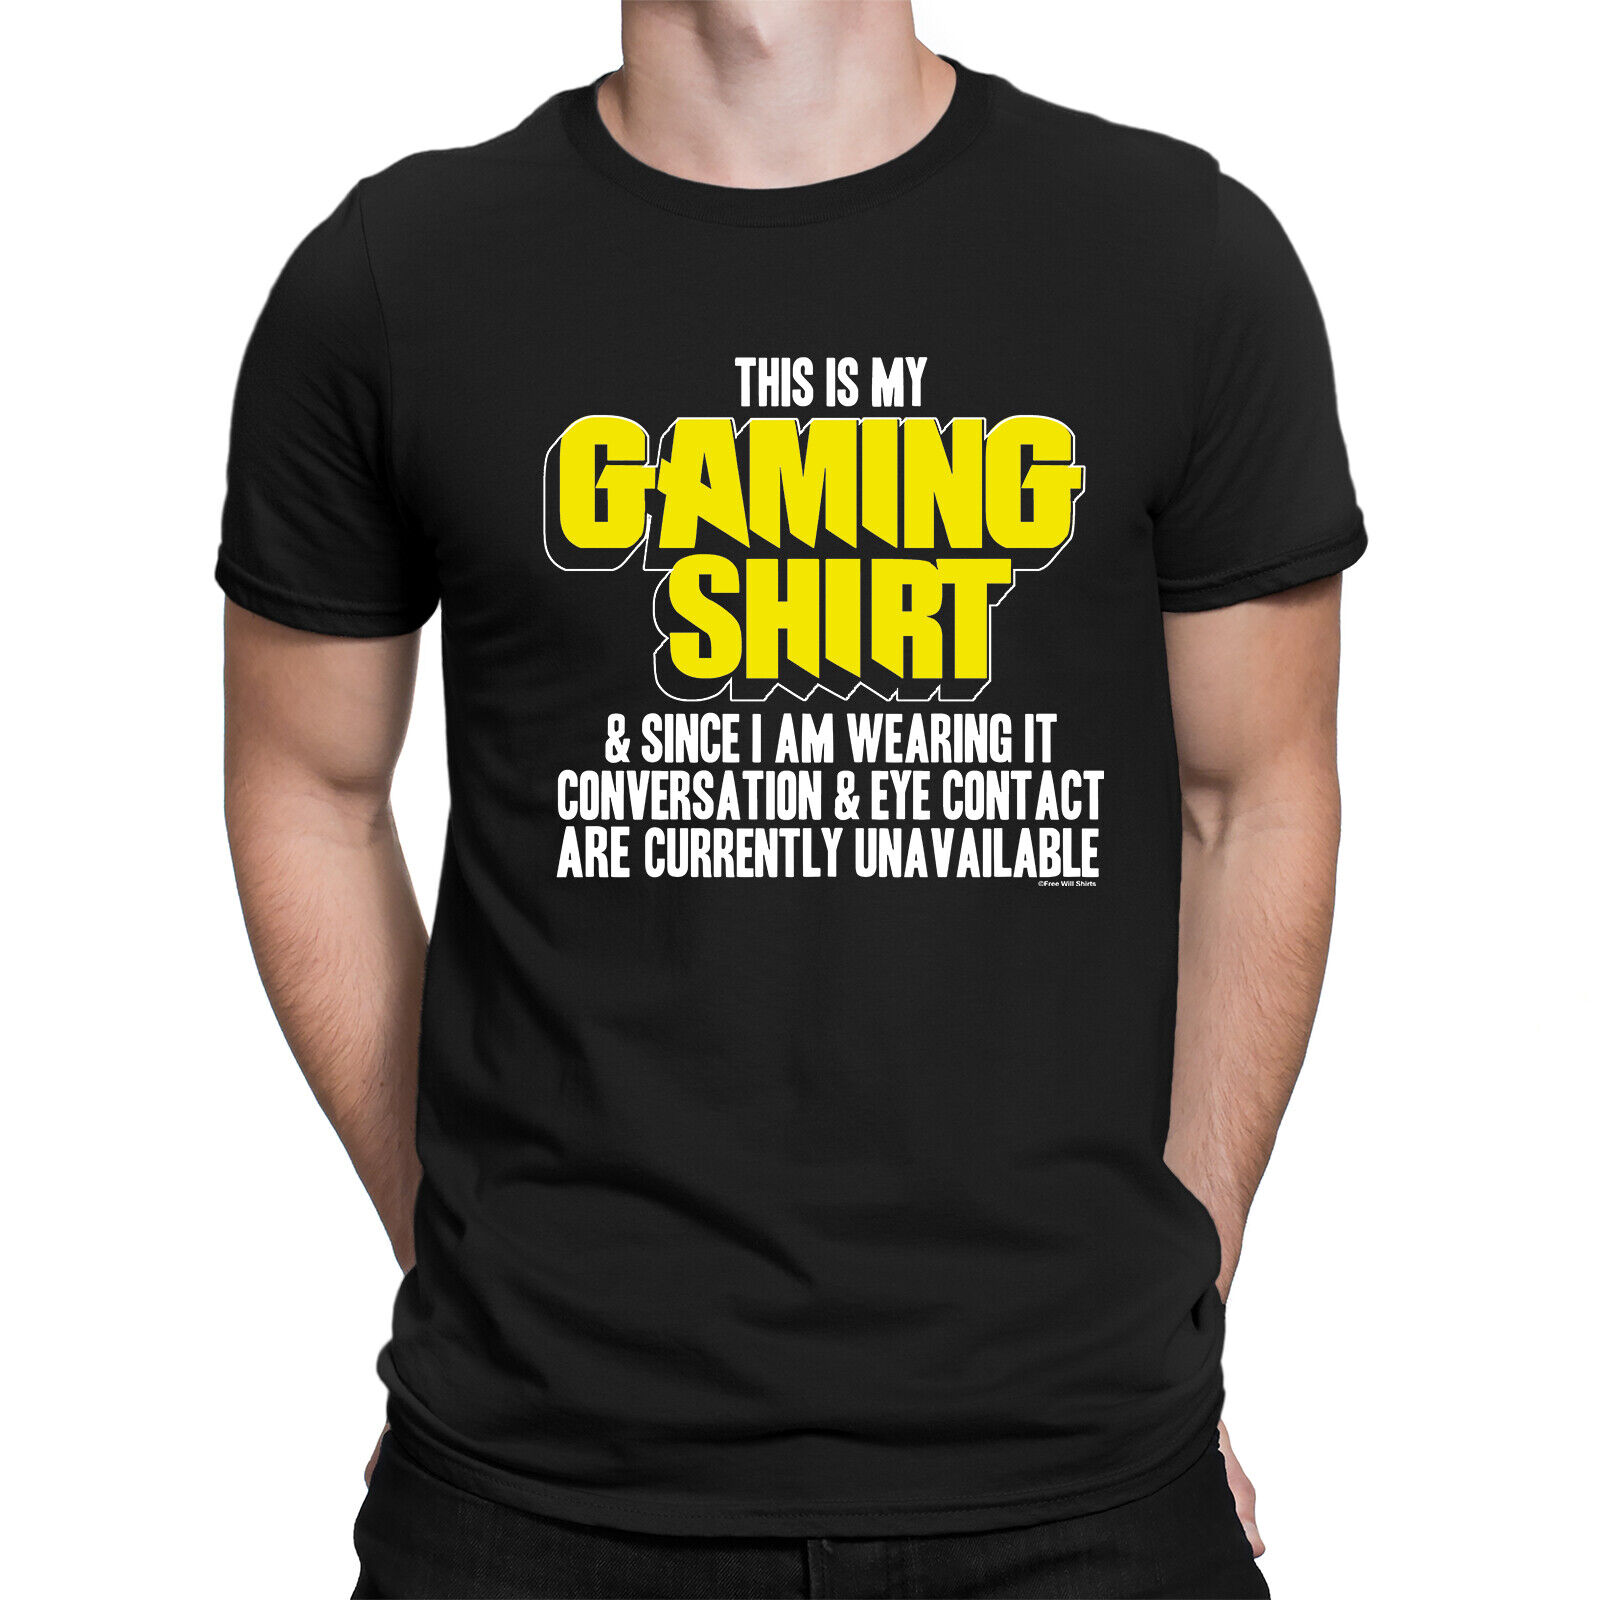 shut Lyricist Clancy This Is My Gaming Shirt Mens ORGANIC Premium Quality T-Shirt Gamer Console  | eBay